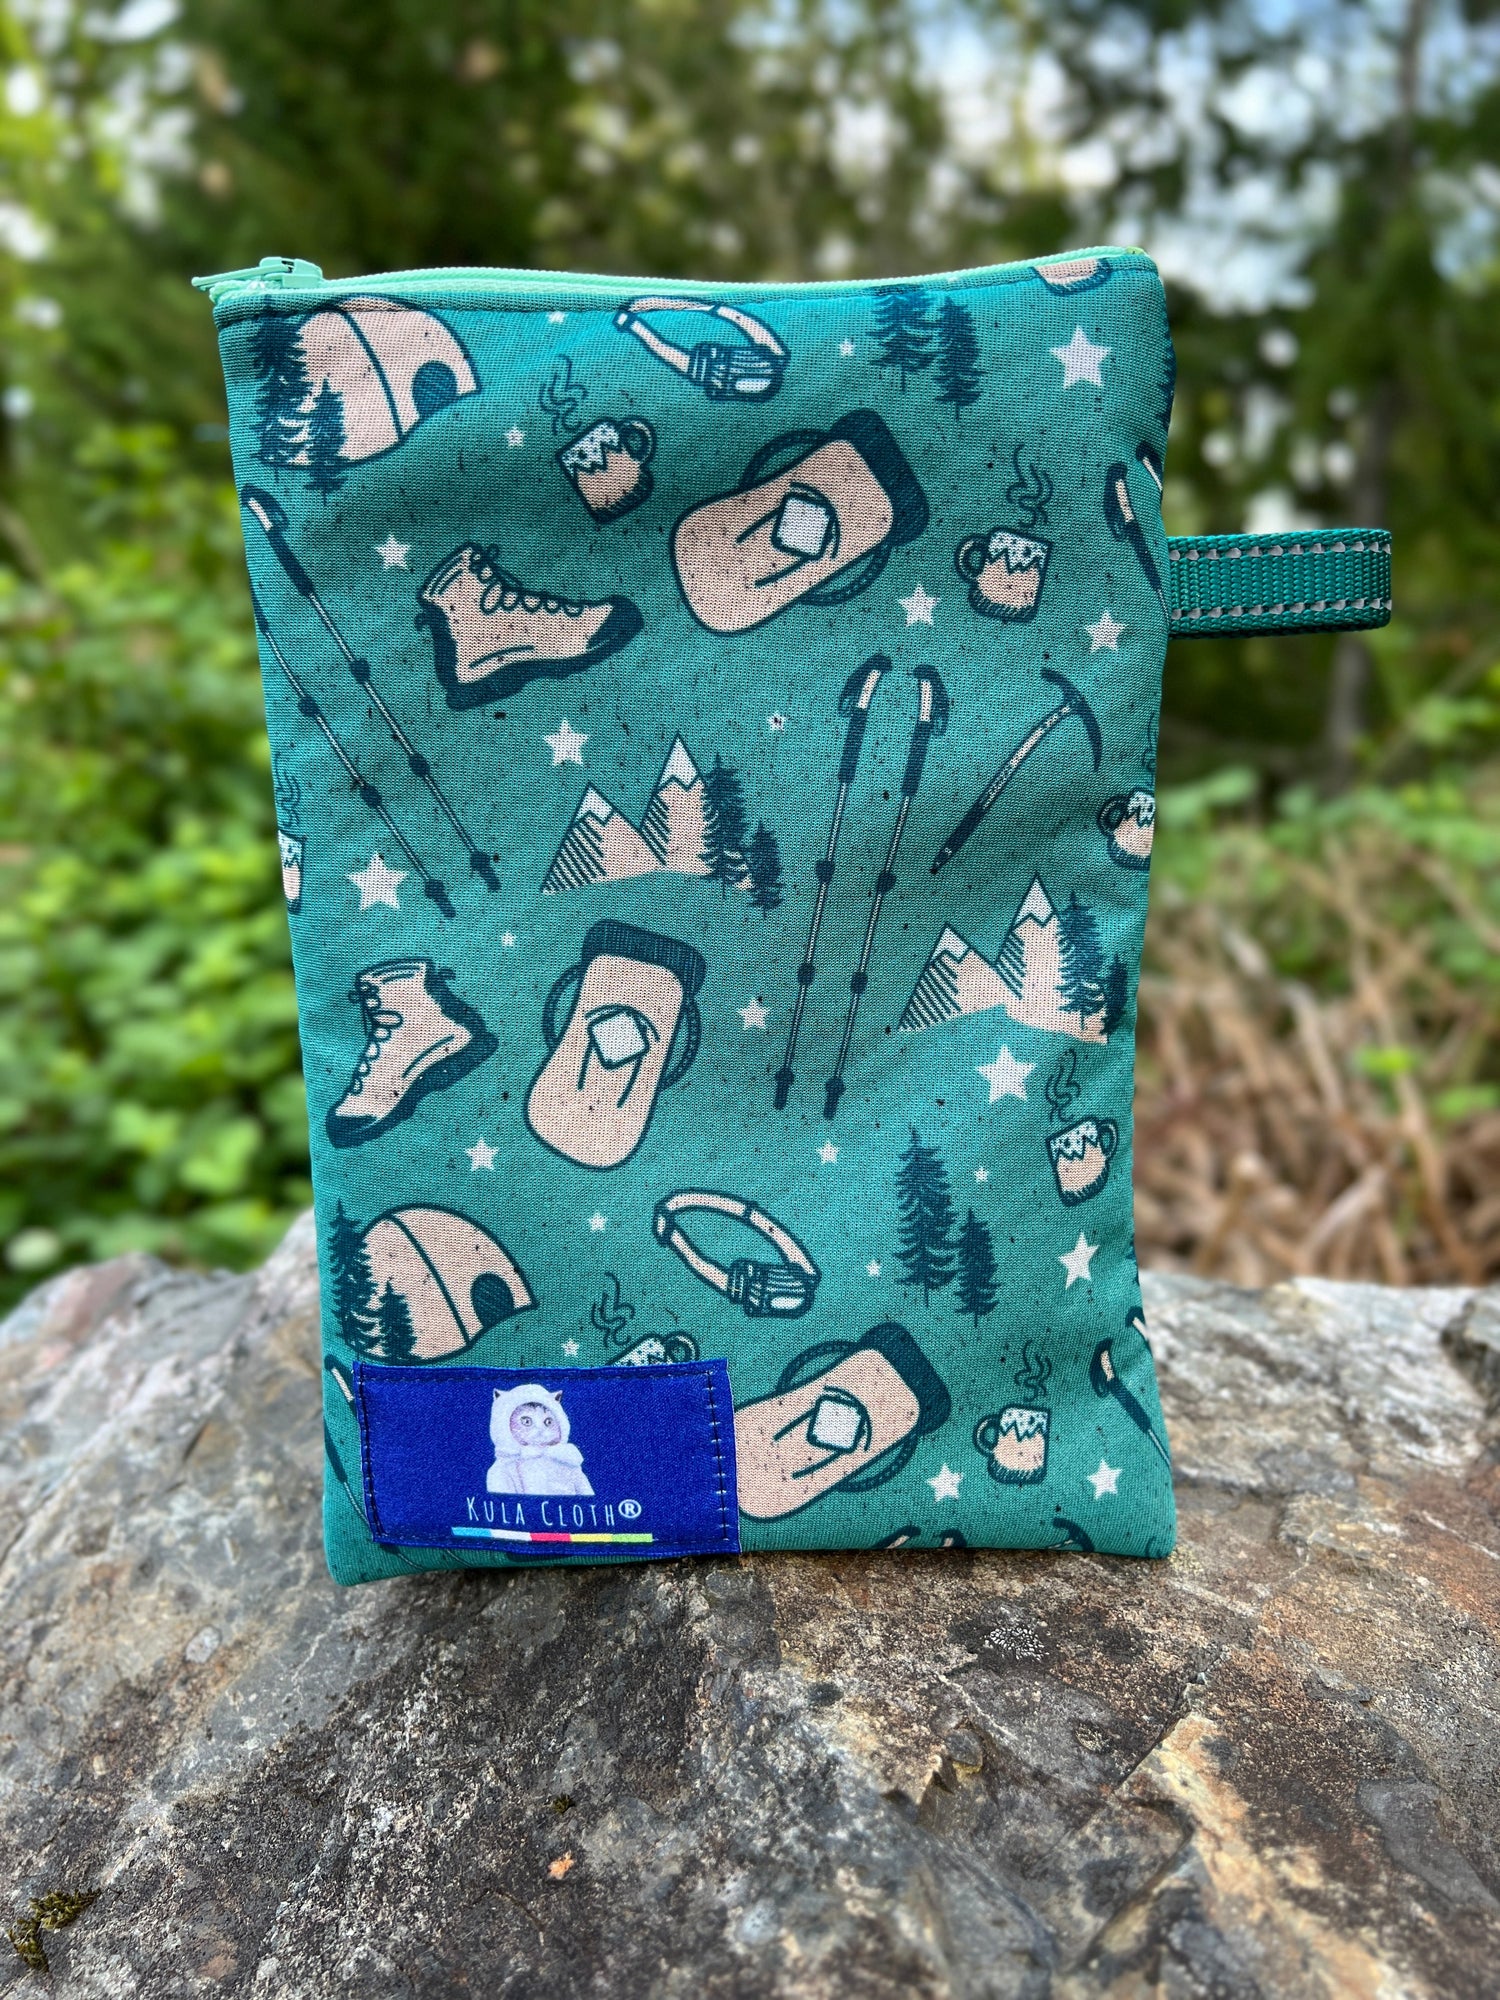 WHOLESALE Kula Pocket - 4 Colors! (Waterproof Antimicrobial Bag)